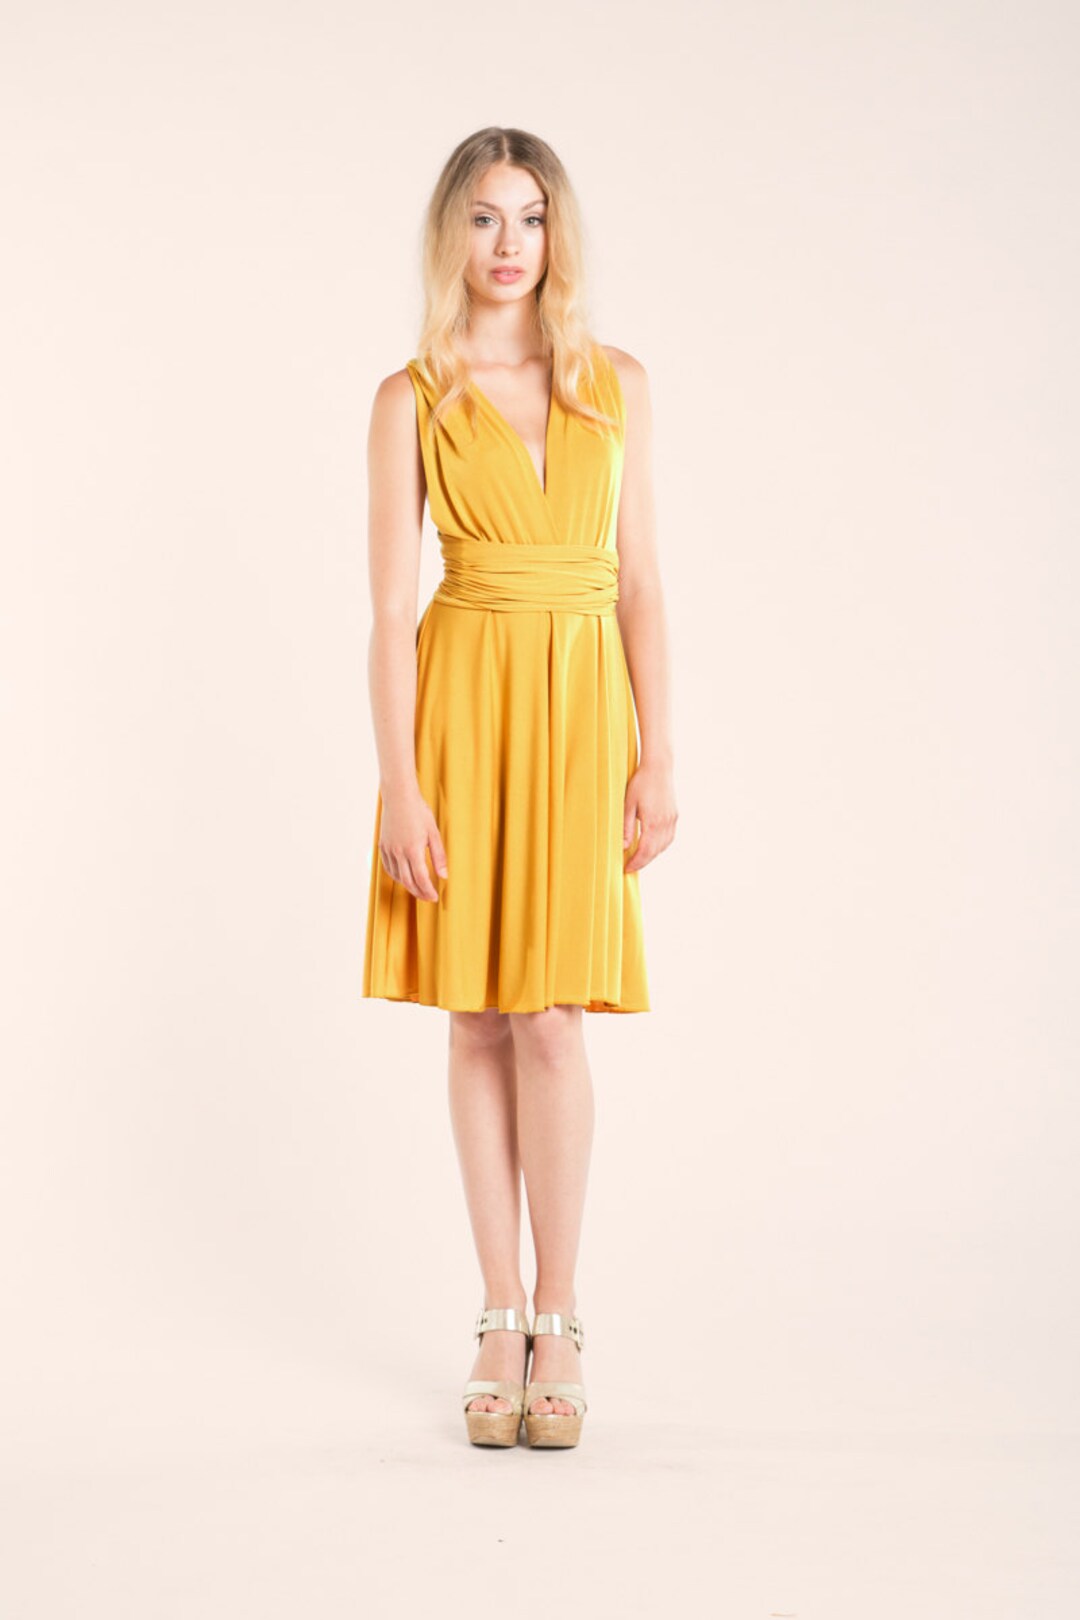 Clearance SALE Short Yellow Dress Mustard Yellow Infinity - Etsy